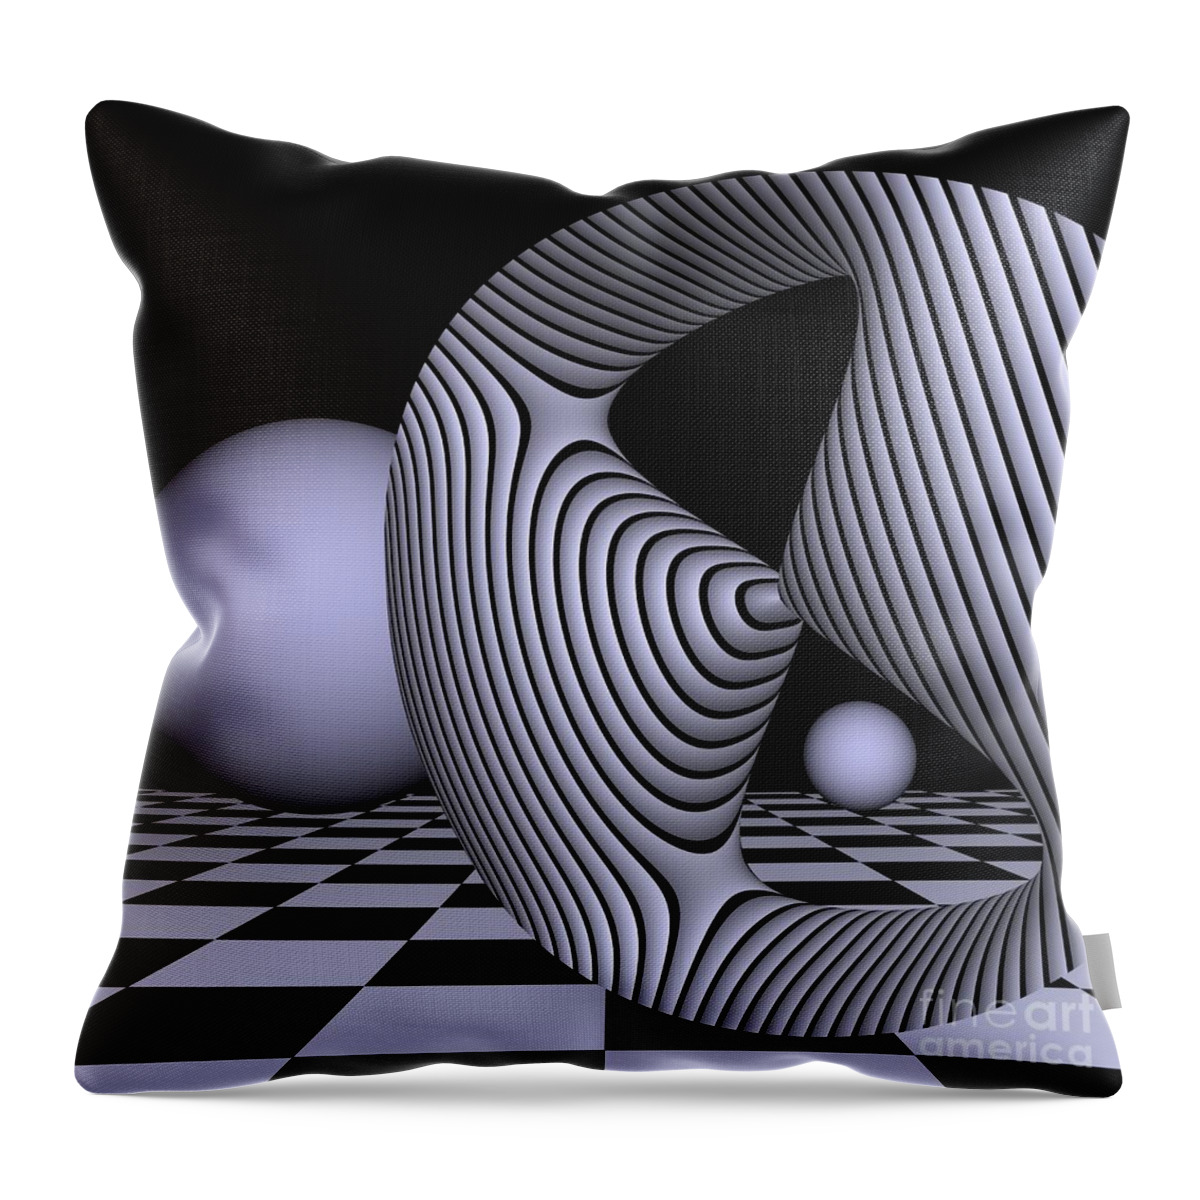 3d Throw Pillow featuring the digital art OpArt Devil's Curve by Issa Bild